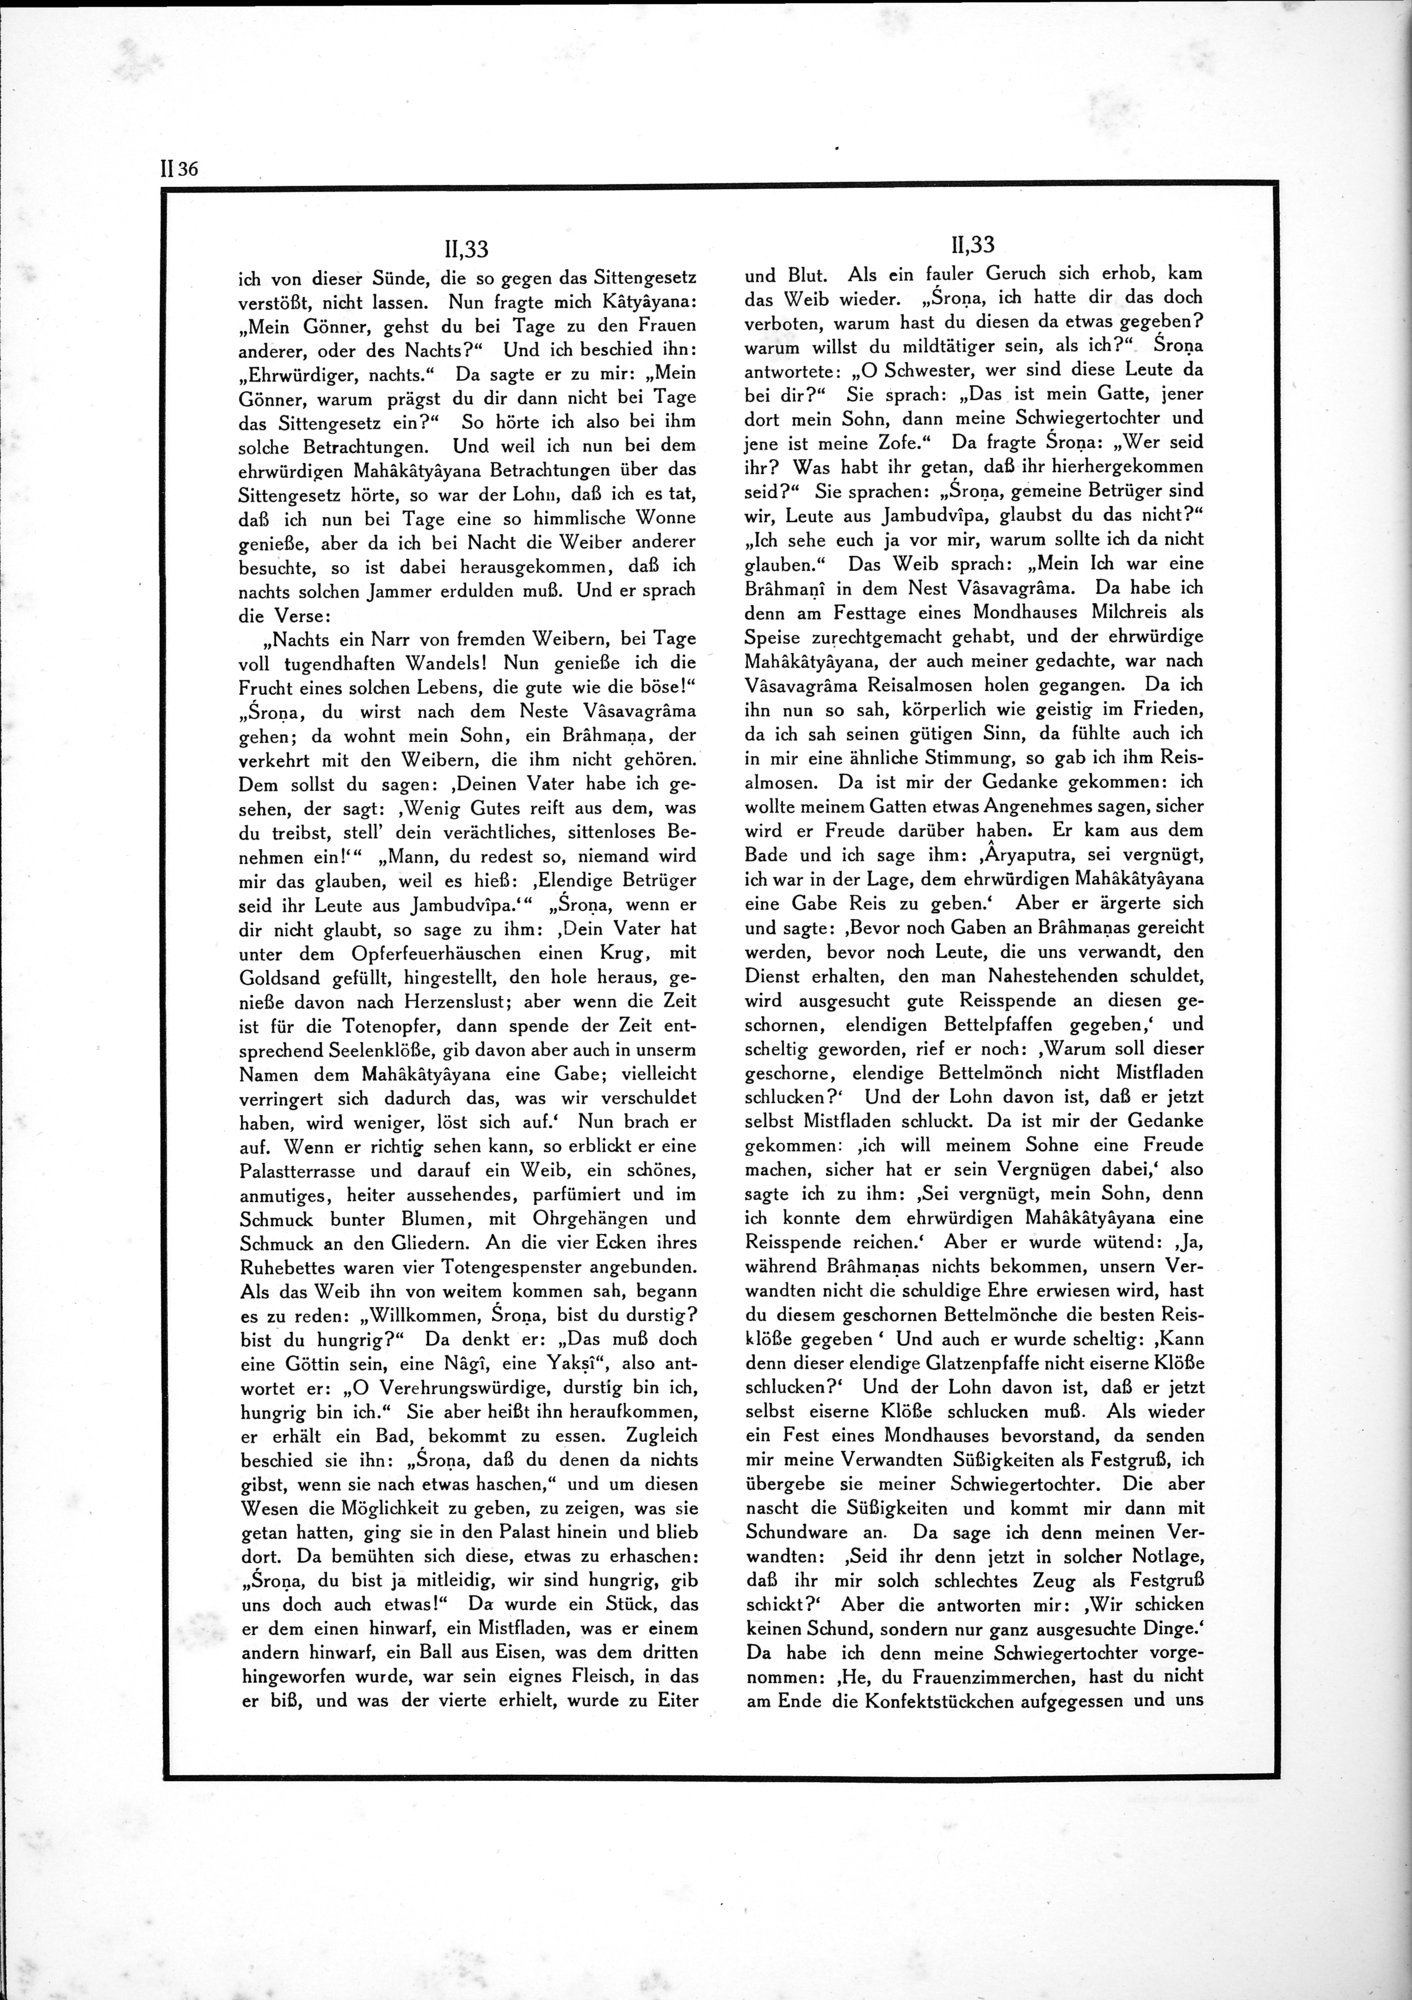 Alt-Kutscha : vol.1 / Page 142 (Grayscale High Resolution Image)